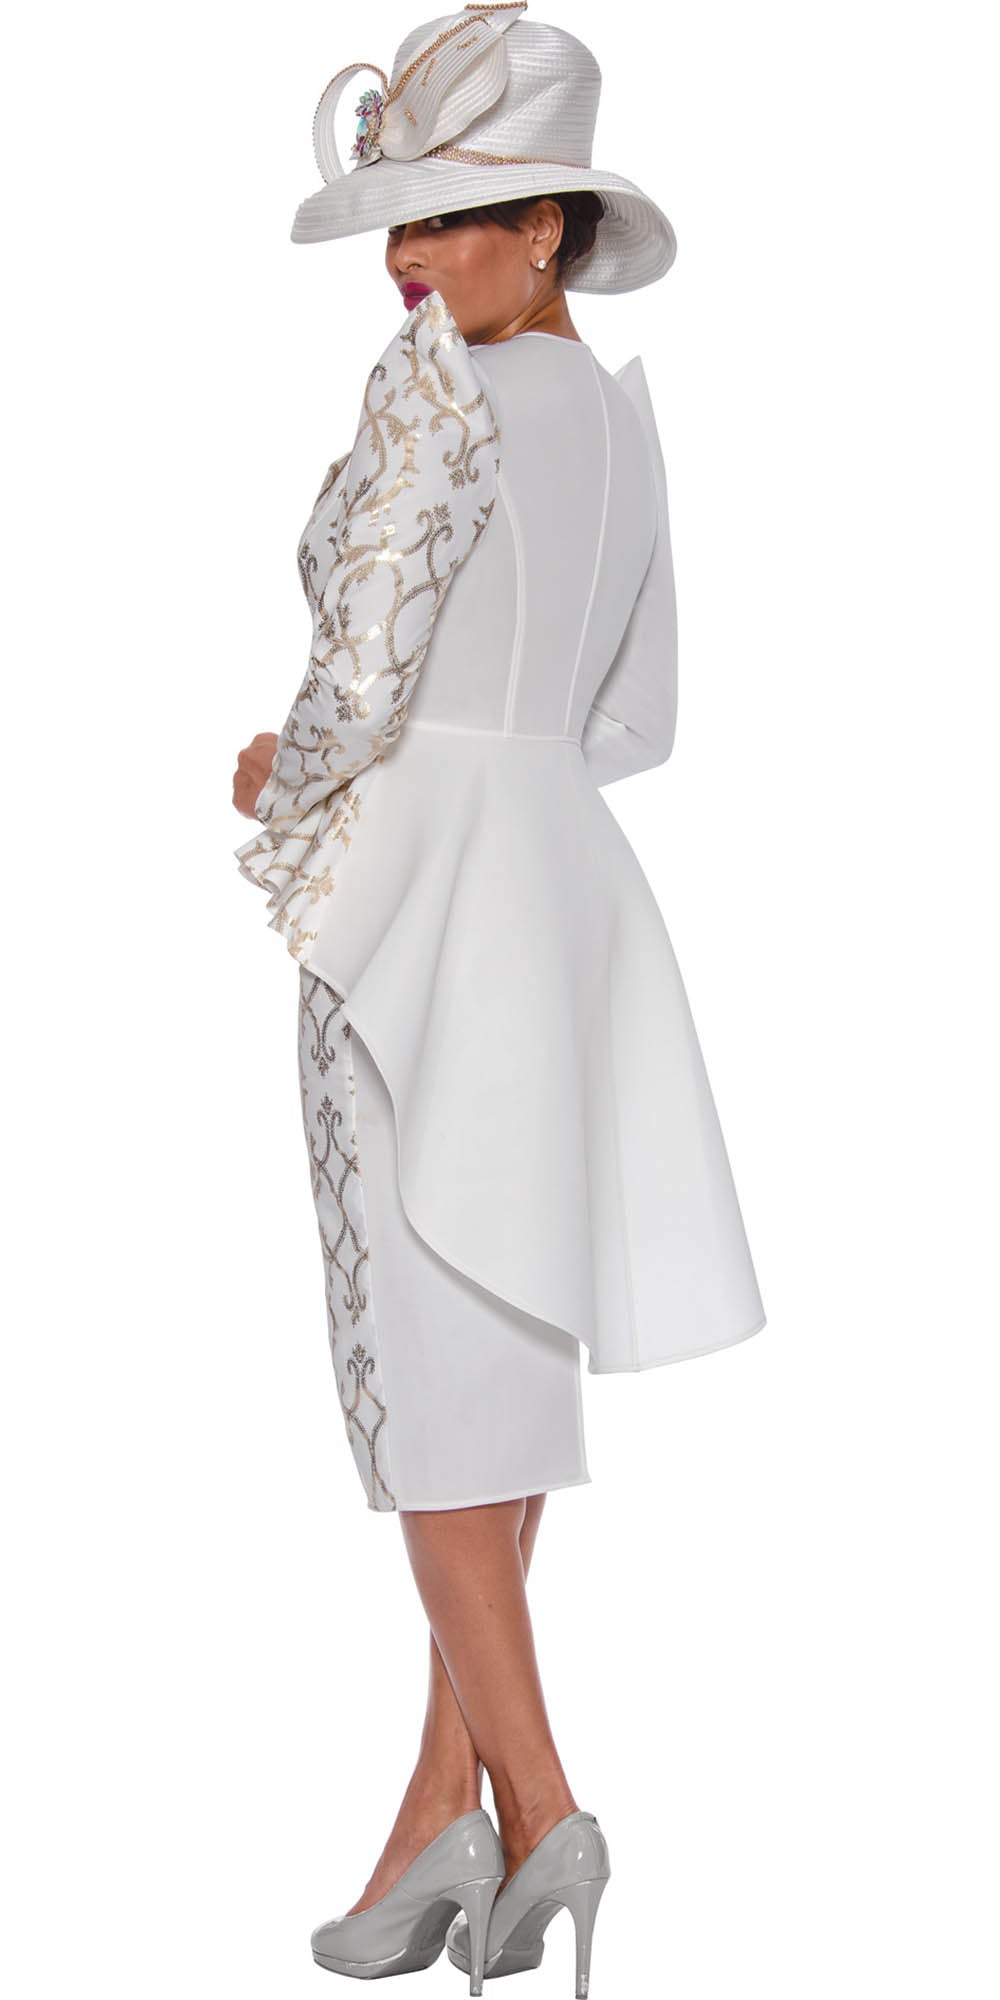 GMI - 9912 - White Gold - Light Scuba Brocade 2pc Skirt Suit